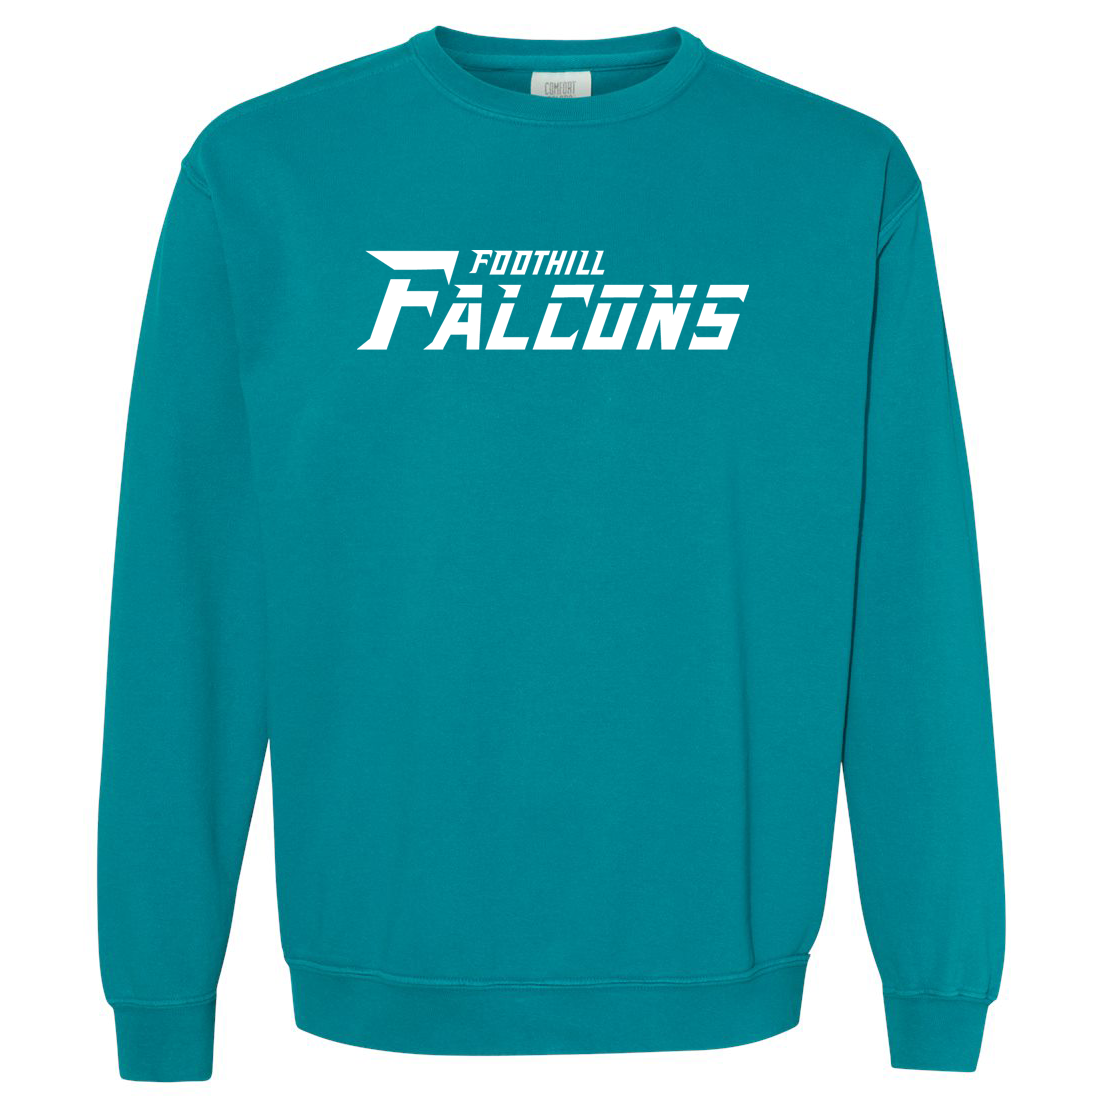 Foothill Falcons Soft Wash Crewneck Sweatshirt